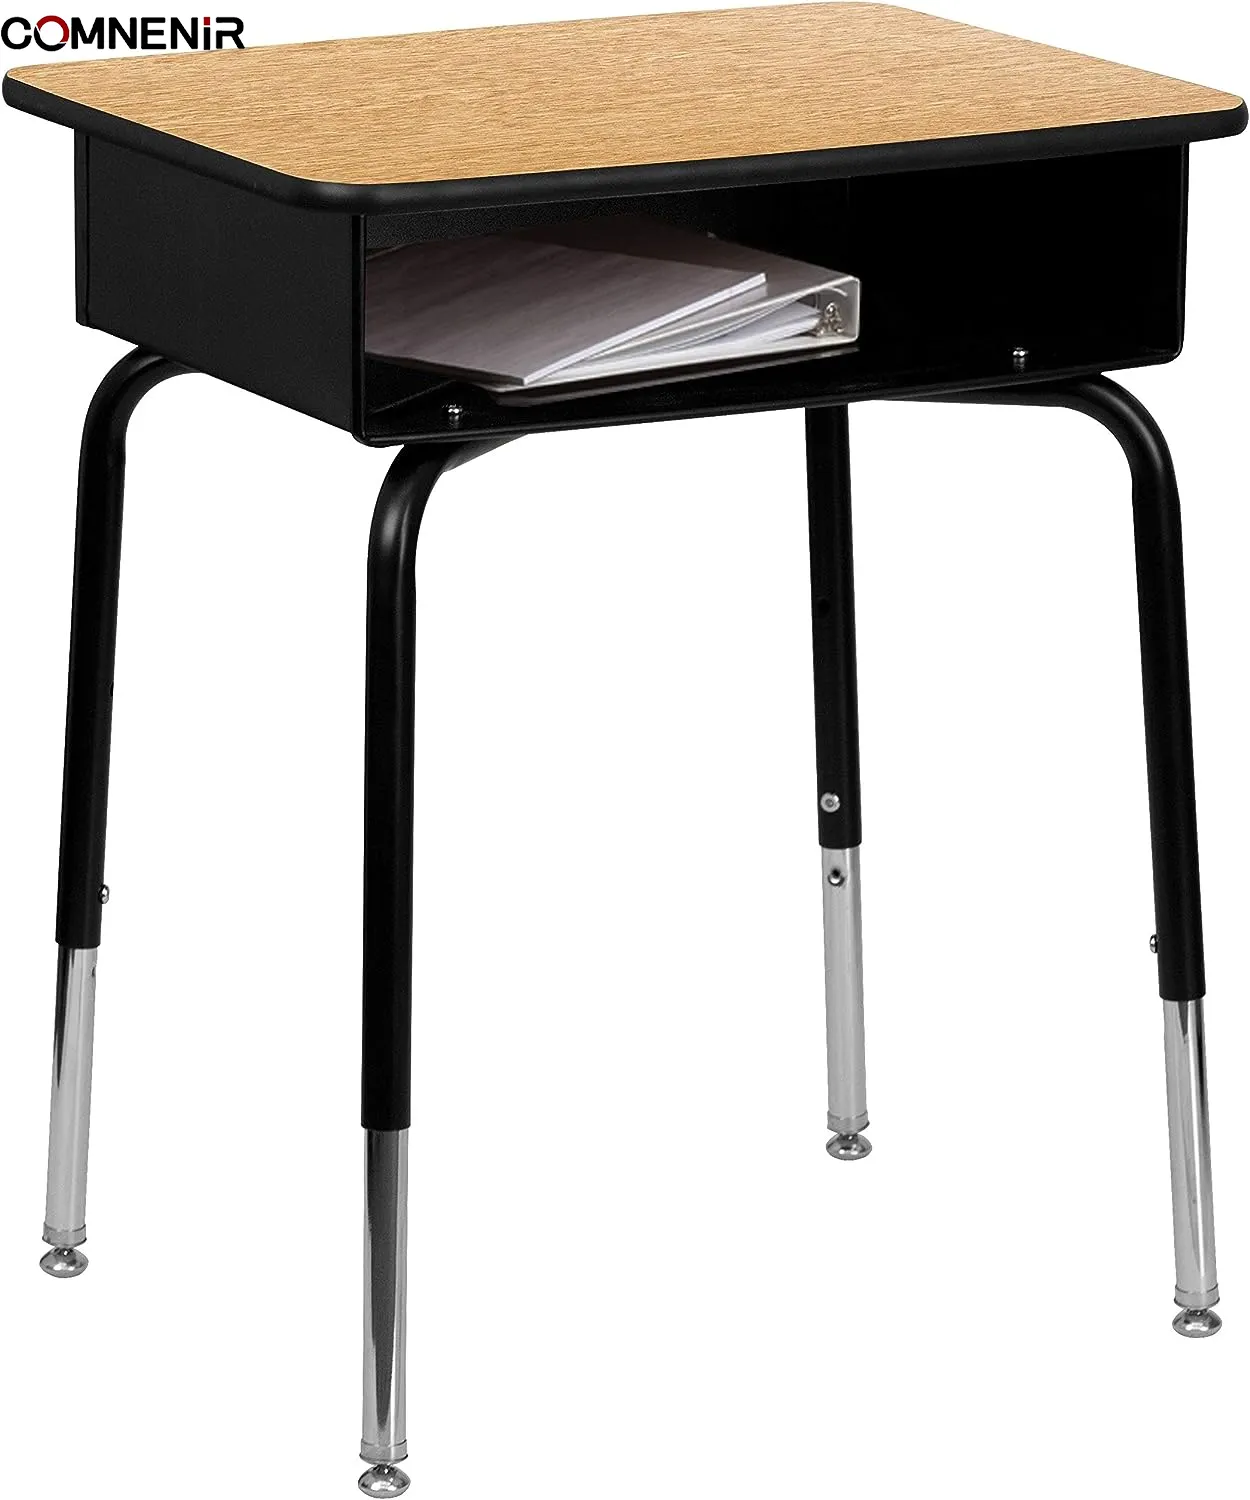 Comnenir Adjustable Height Open Front School Desk Durable Desk for School or Remote Learning